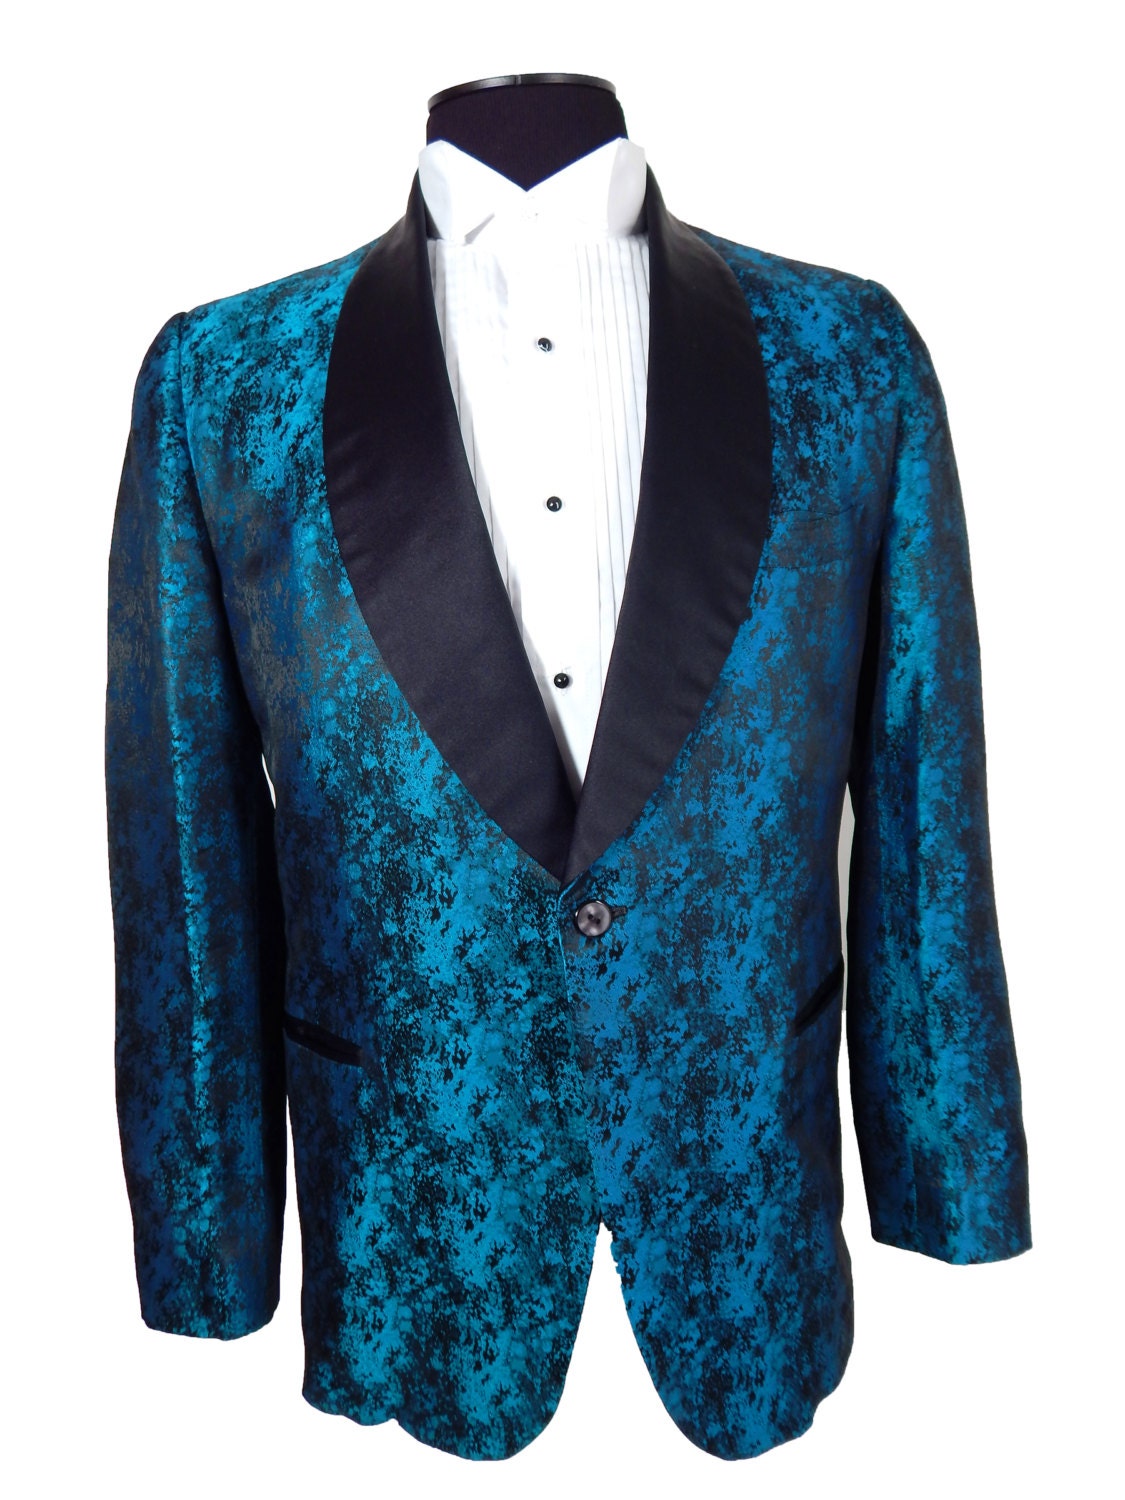 Mens Vintage 1960s Tuxedo Jacket. Peacock Blue Dinner Jacket